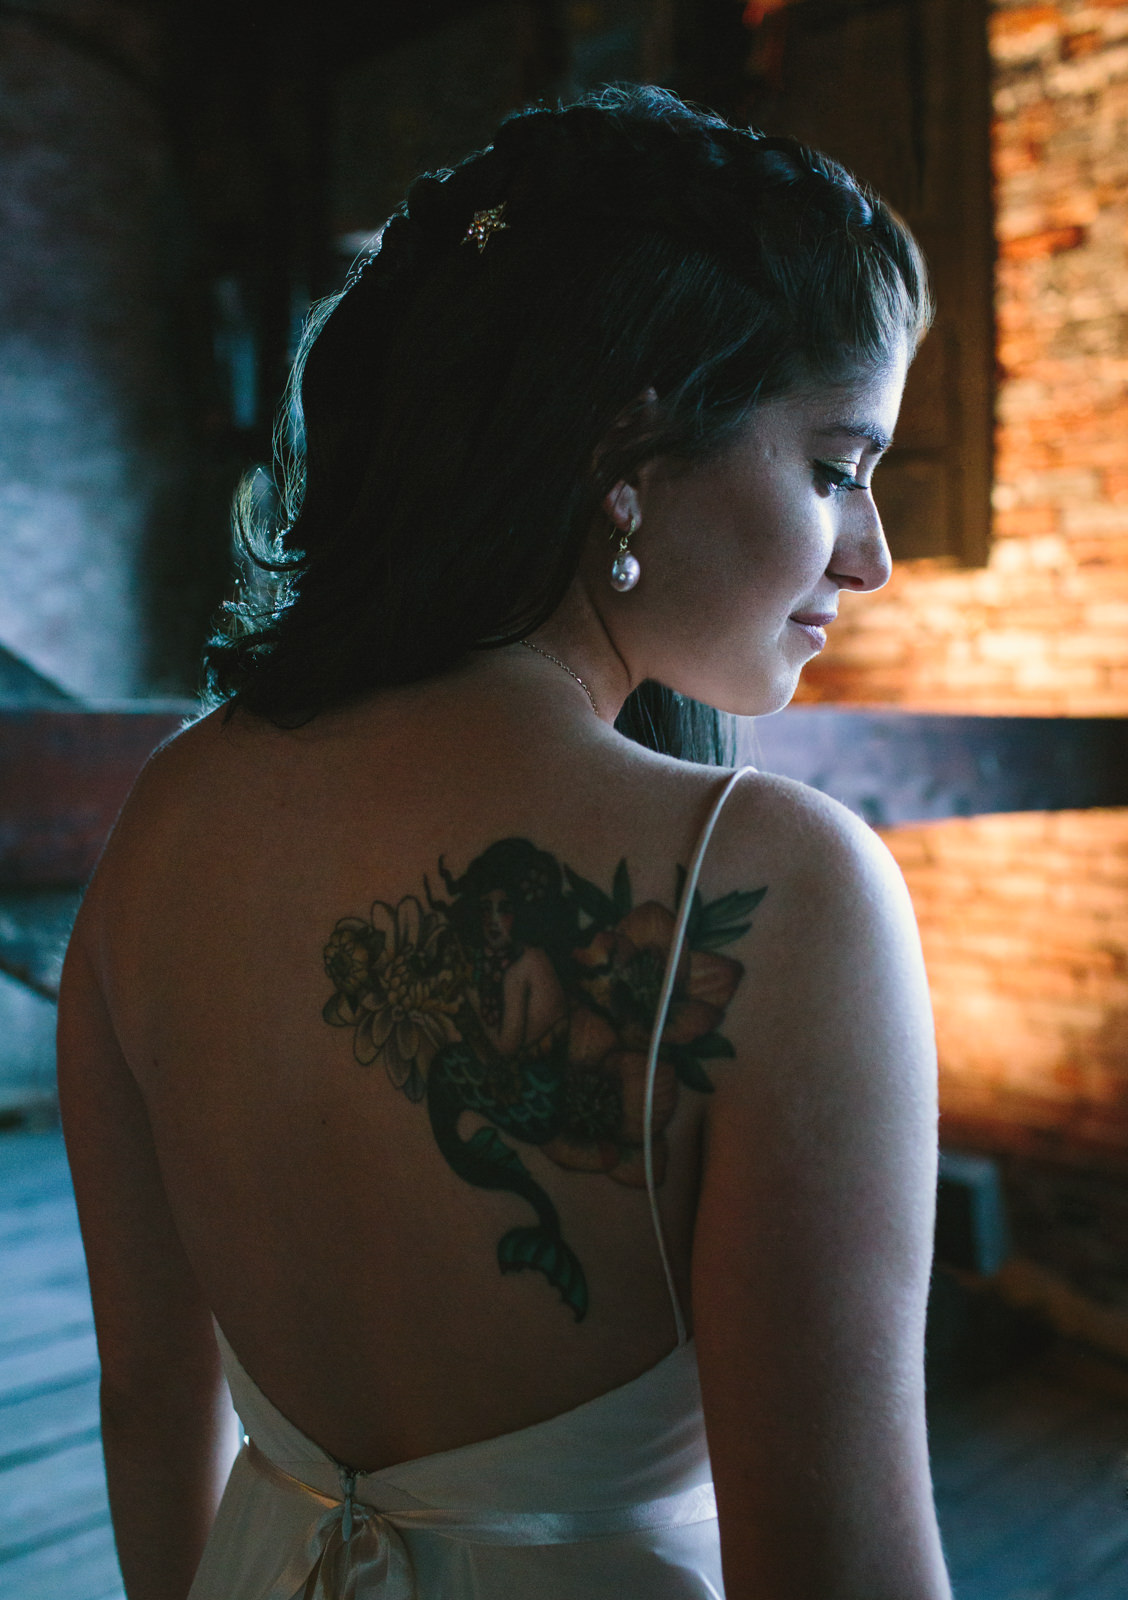  beautiful tattoed bride in portland, maine 